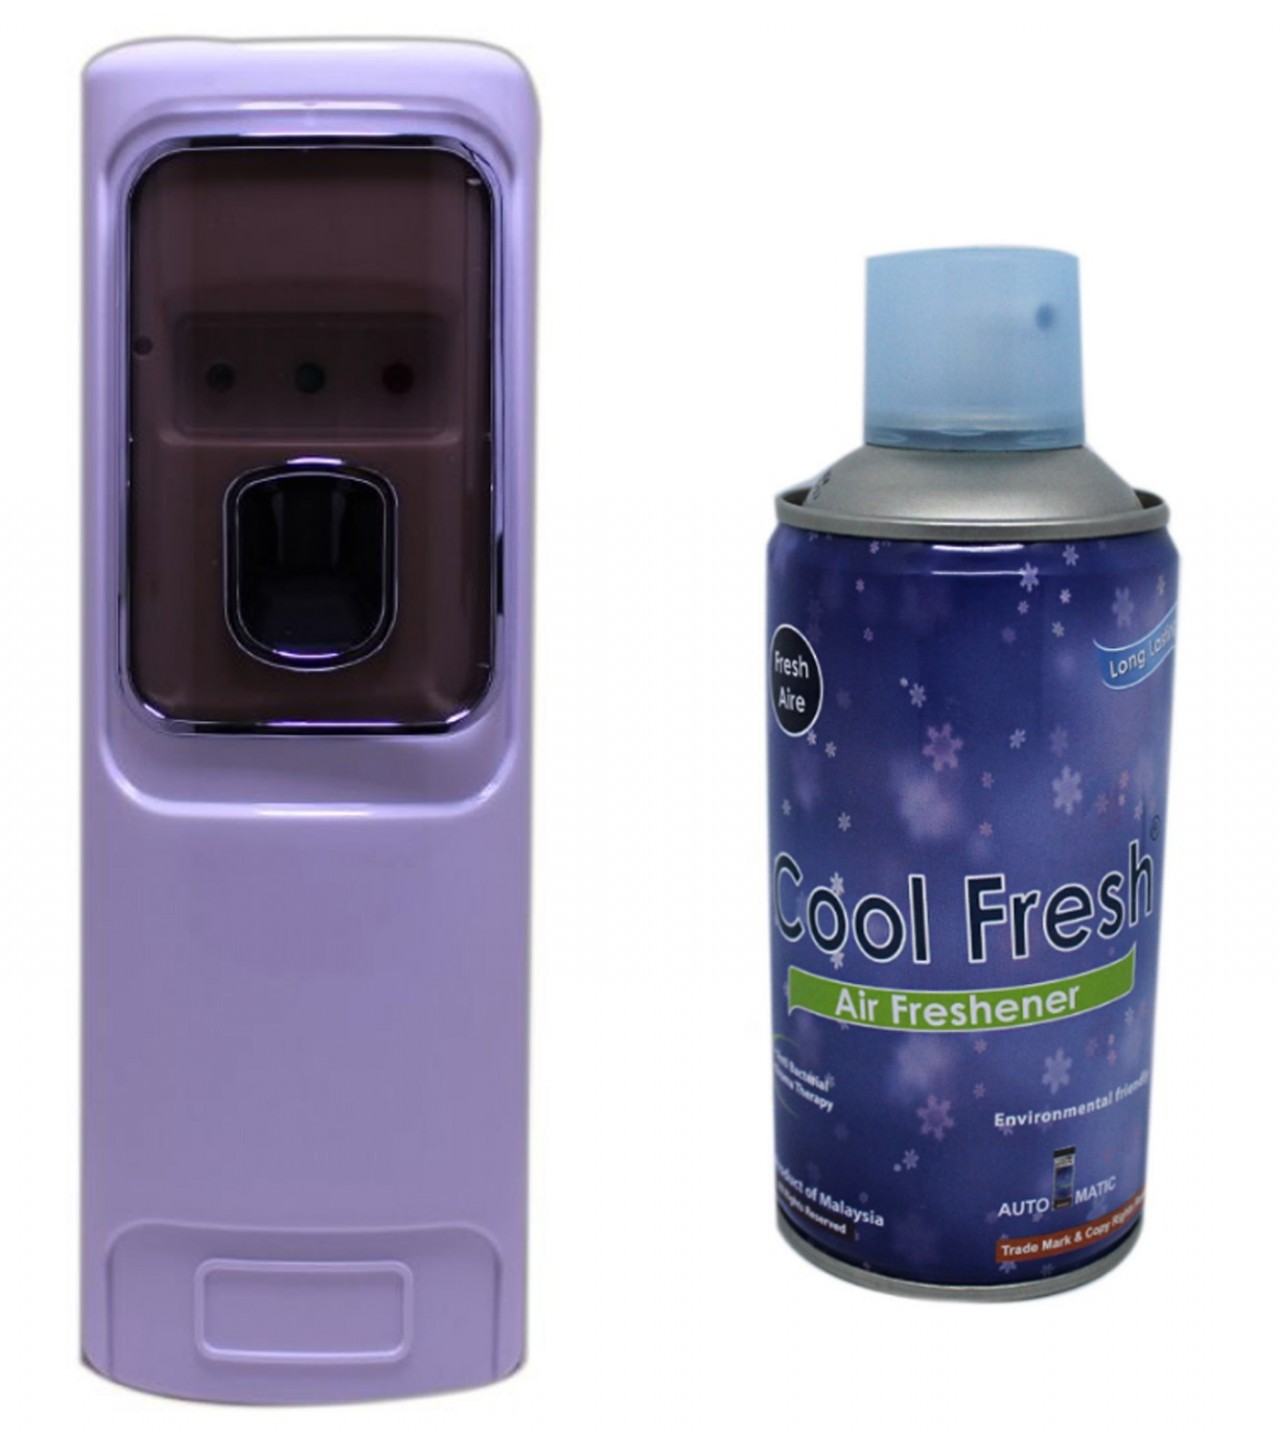 Automatic LED Air Freshener Dispenser with Free Air Freshener 300 ml Bottle - White